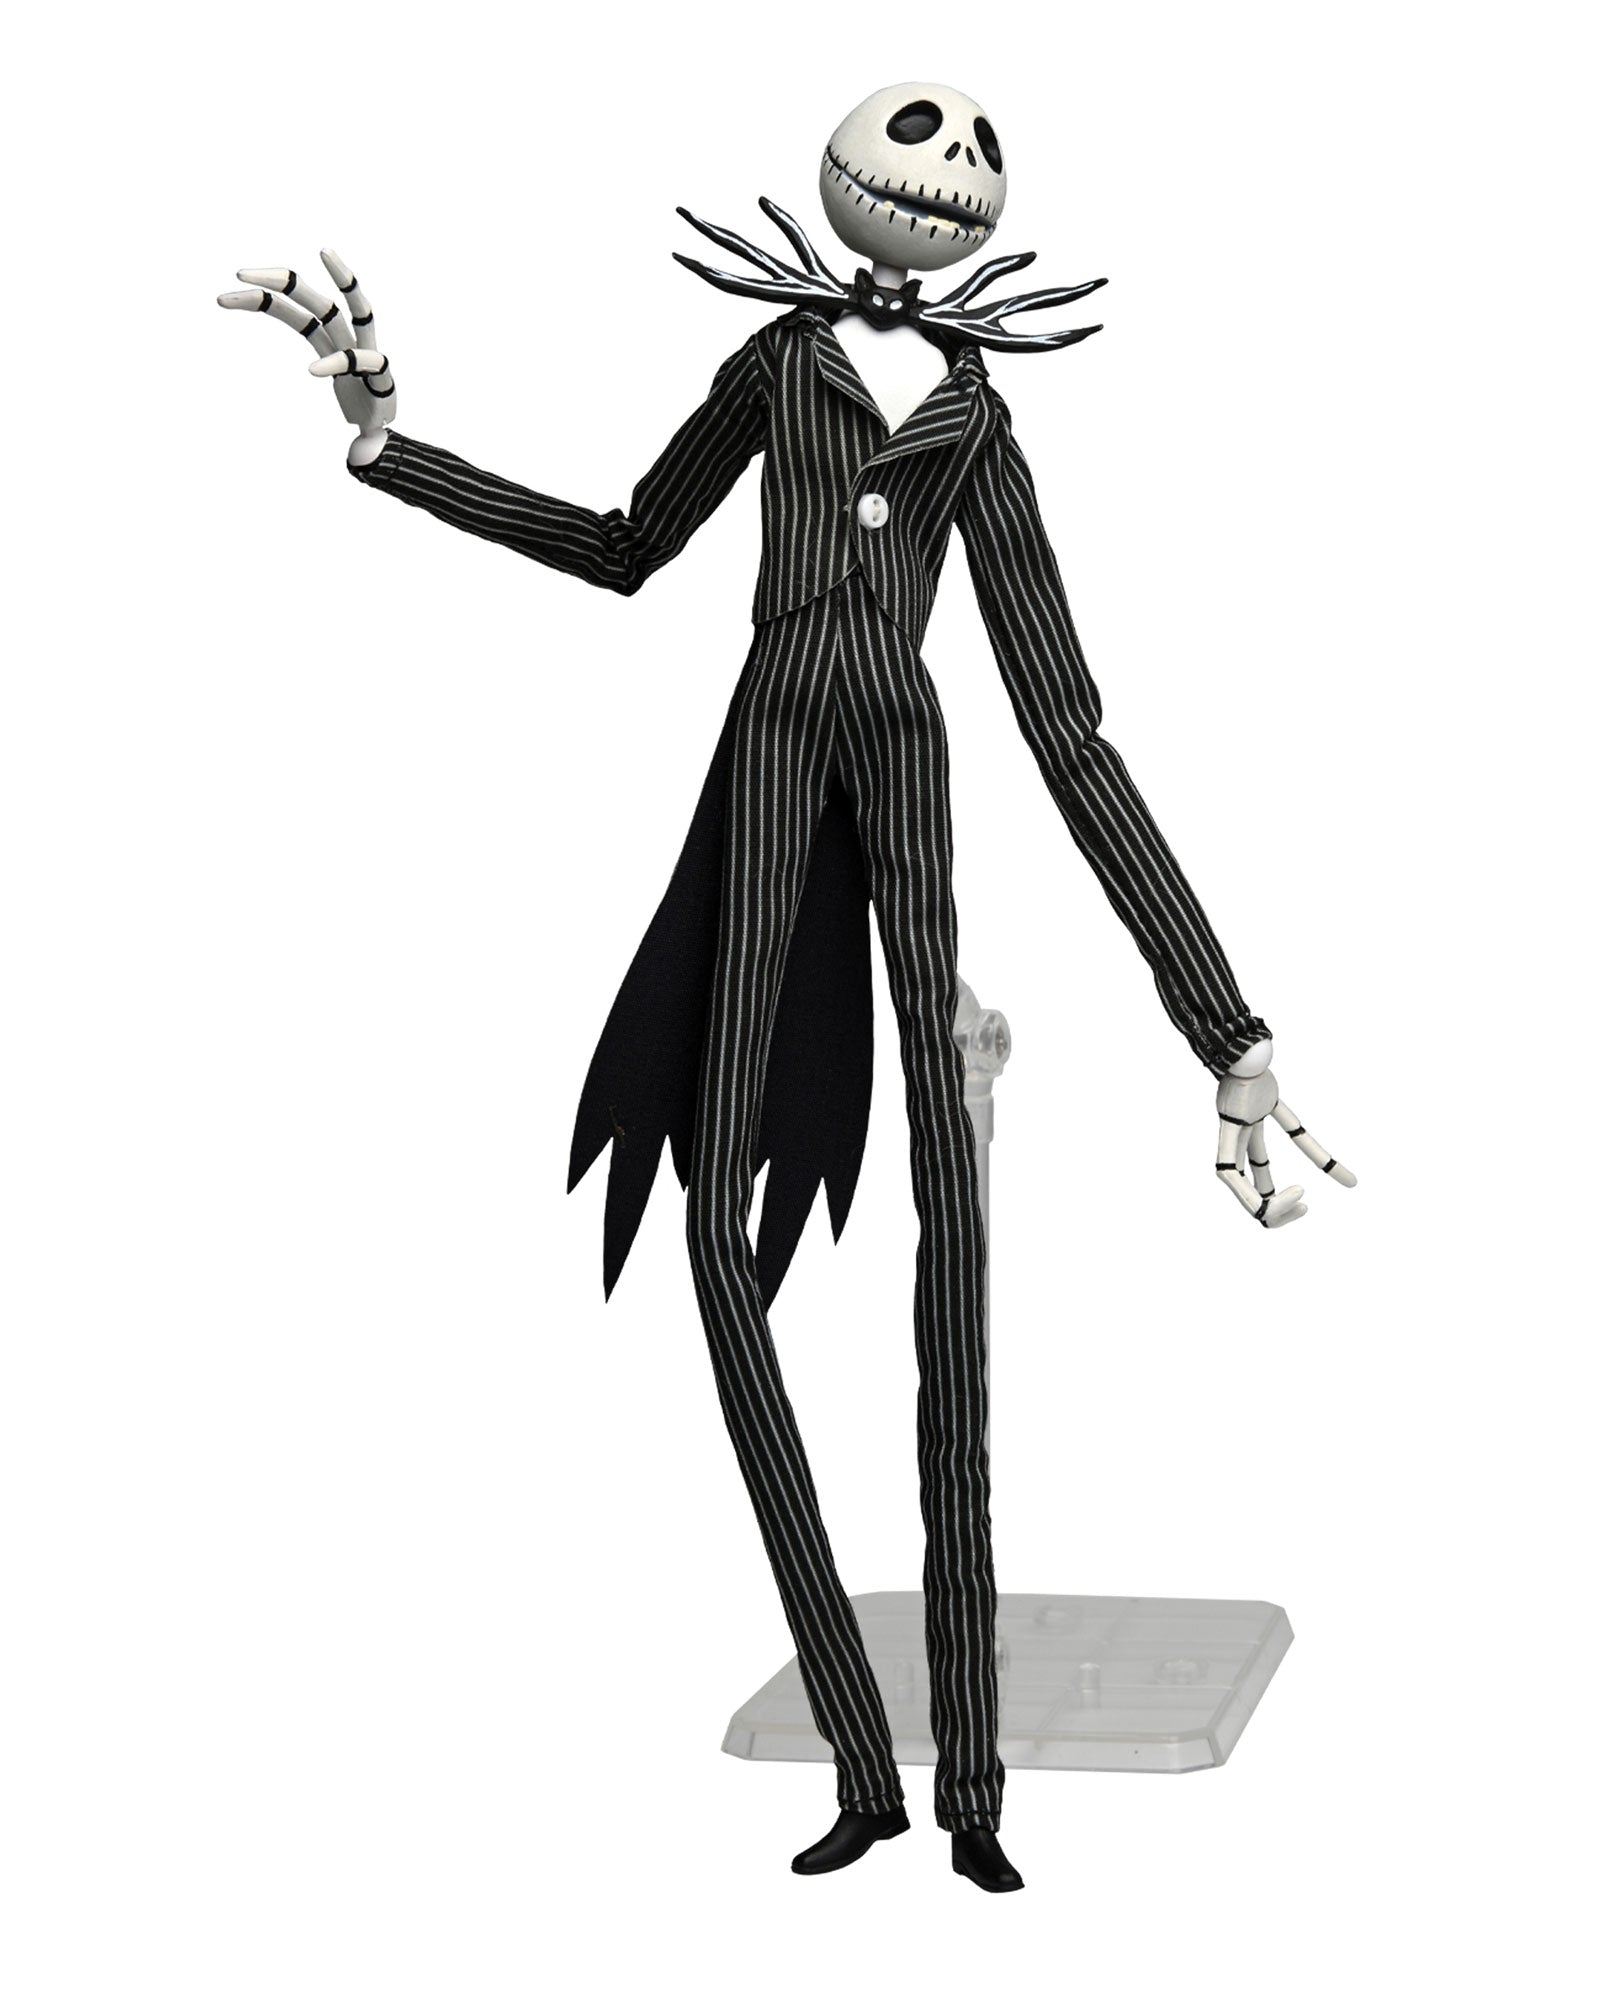 NECA Unveils Jack Skellington Articulated Figure